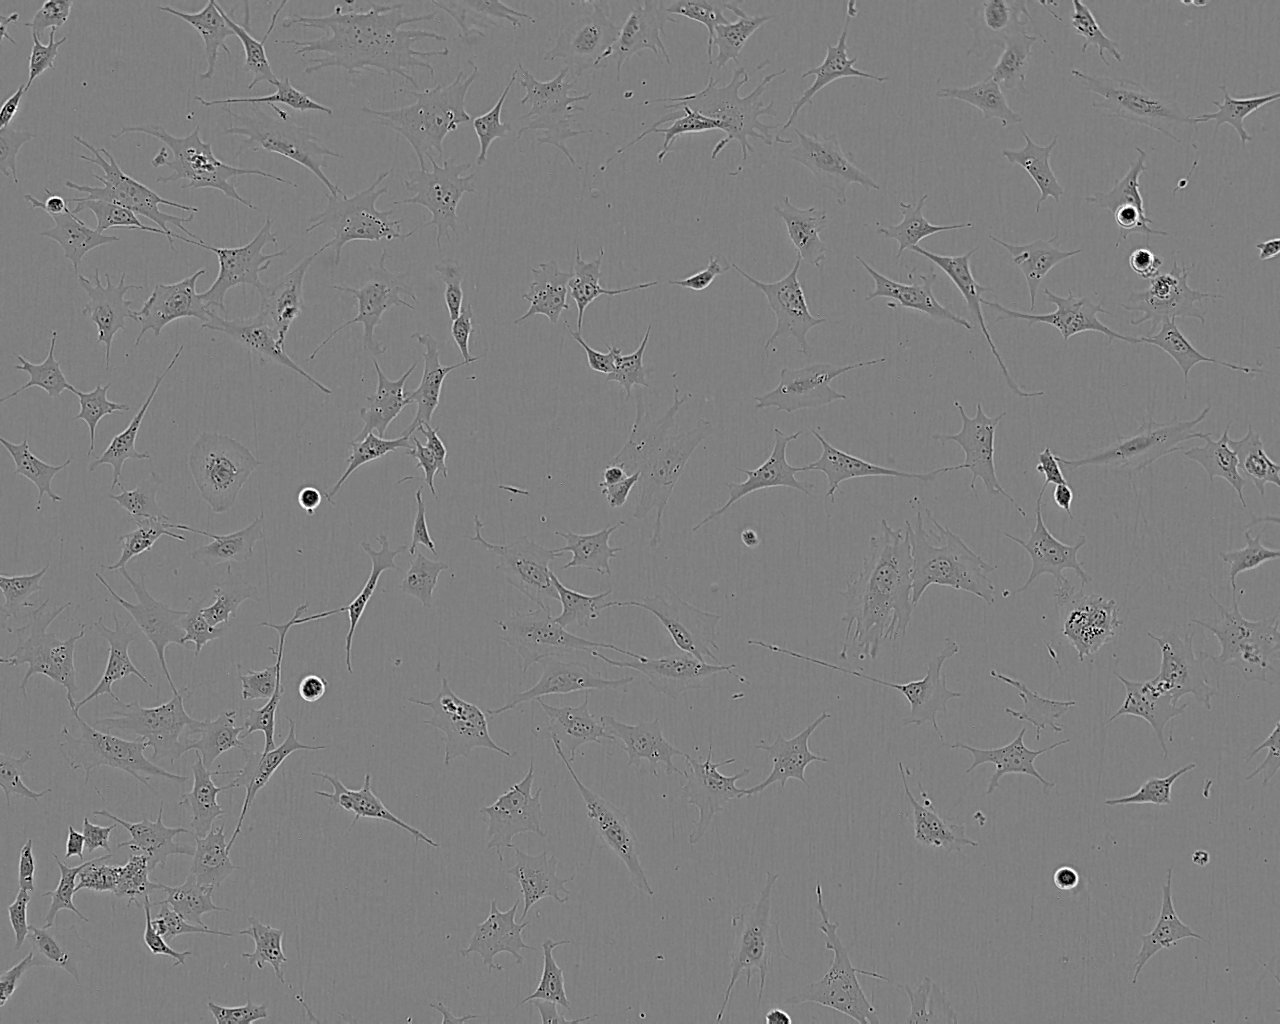 NUGC-4 epithelioid cells人胃癌细胞系,NUGC-4 epithelioid cells